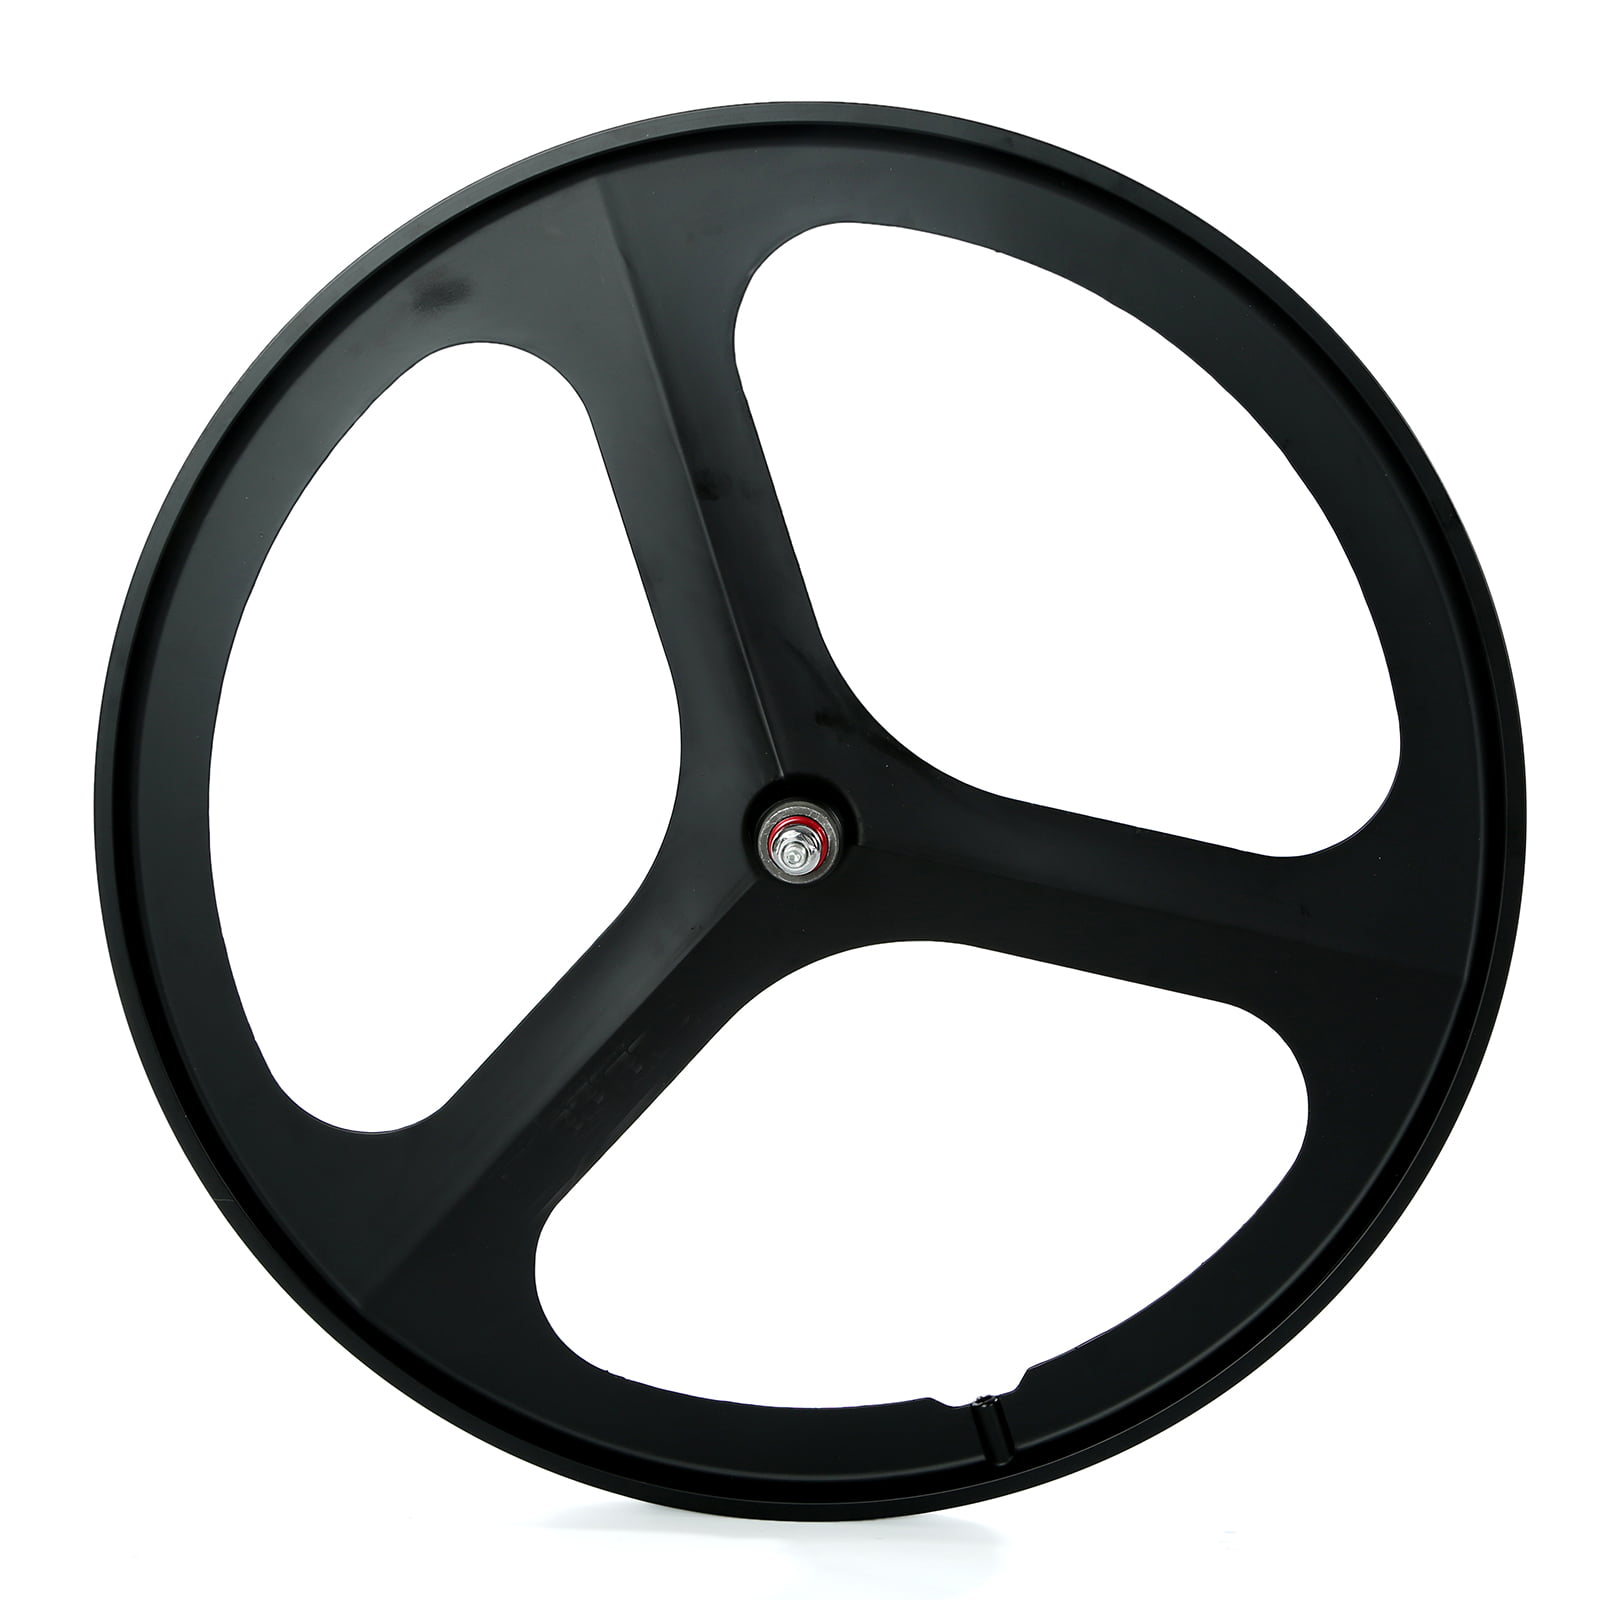 Details about   Bike White Front Wheel Rim 700c Fixed Gear Tri Spoke Fixie Single Speed 